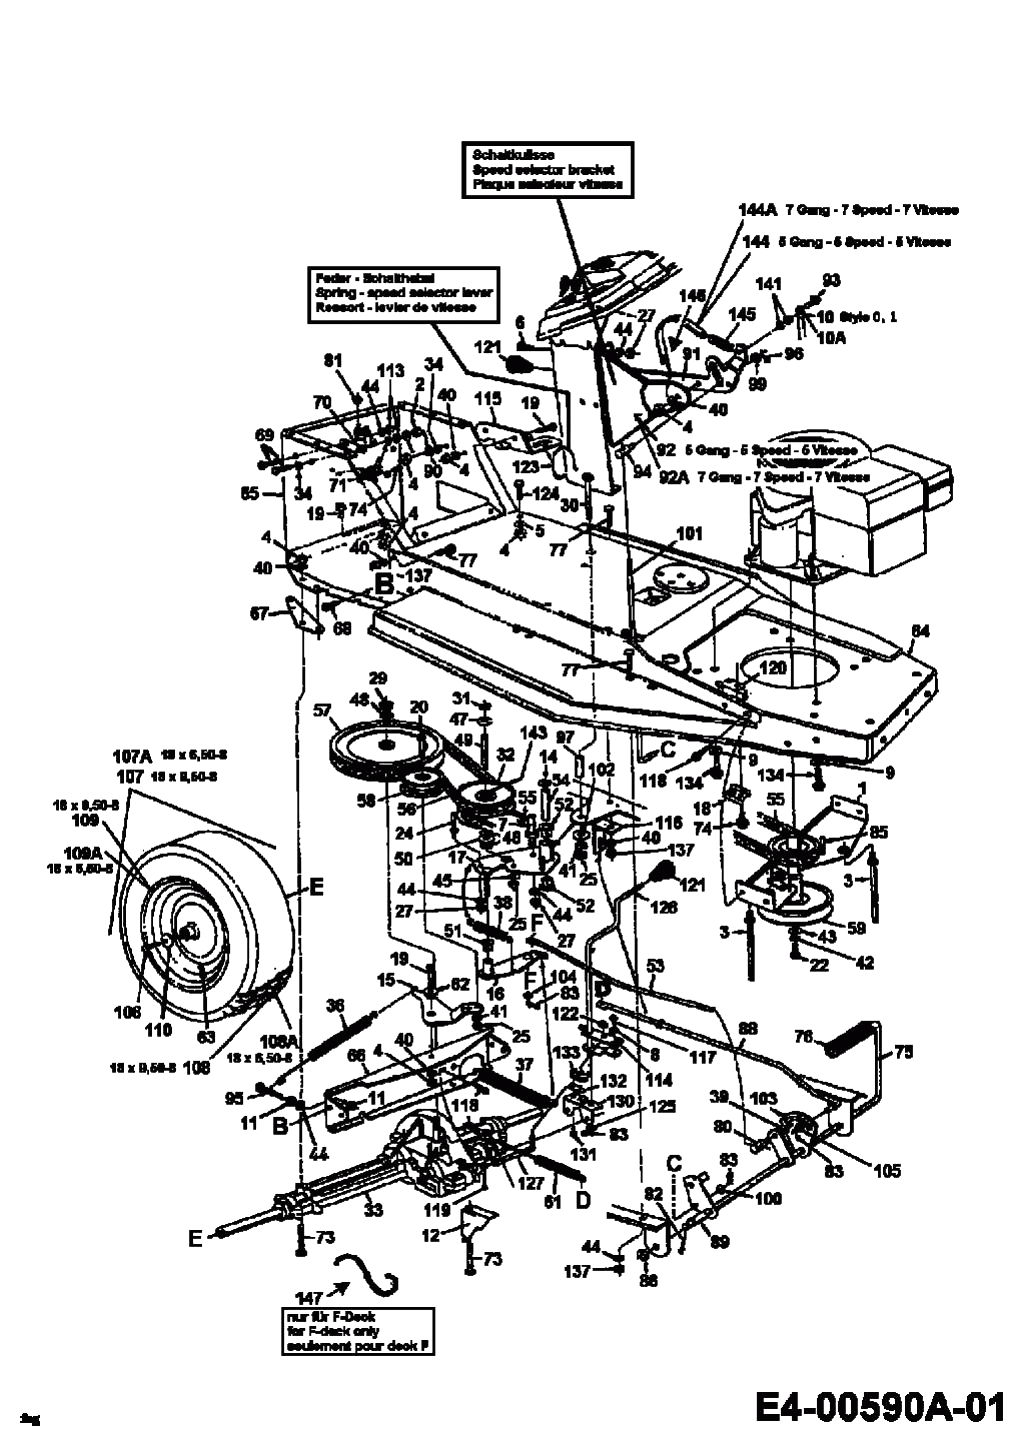 MTD Артикул 13AC451C600 (год выпуска 1998). Система привода, шкив двигателя, педали, задние колеса